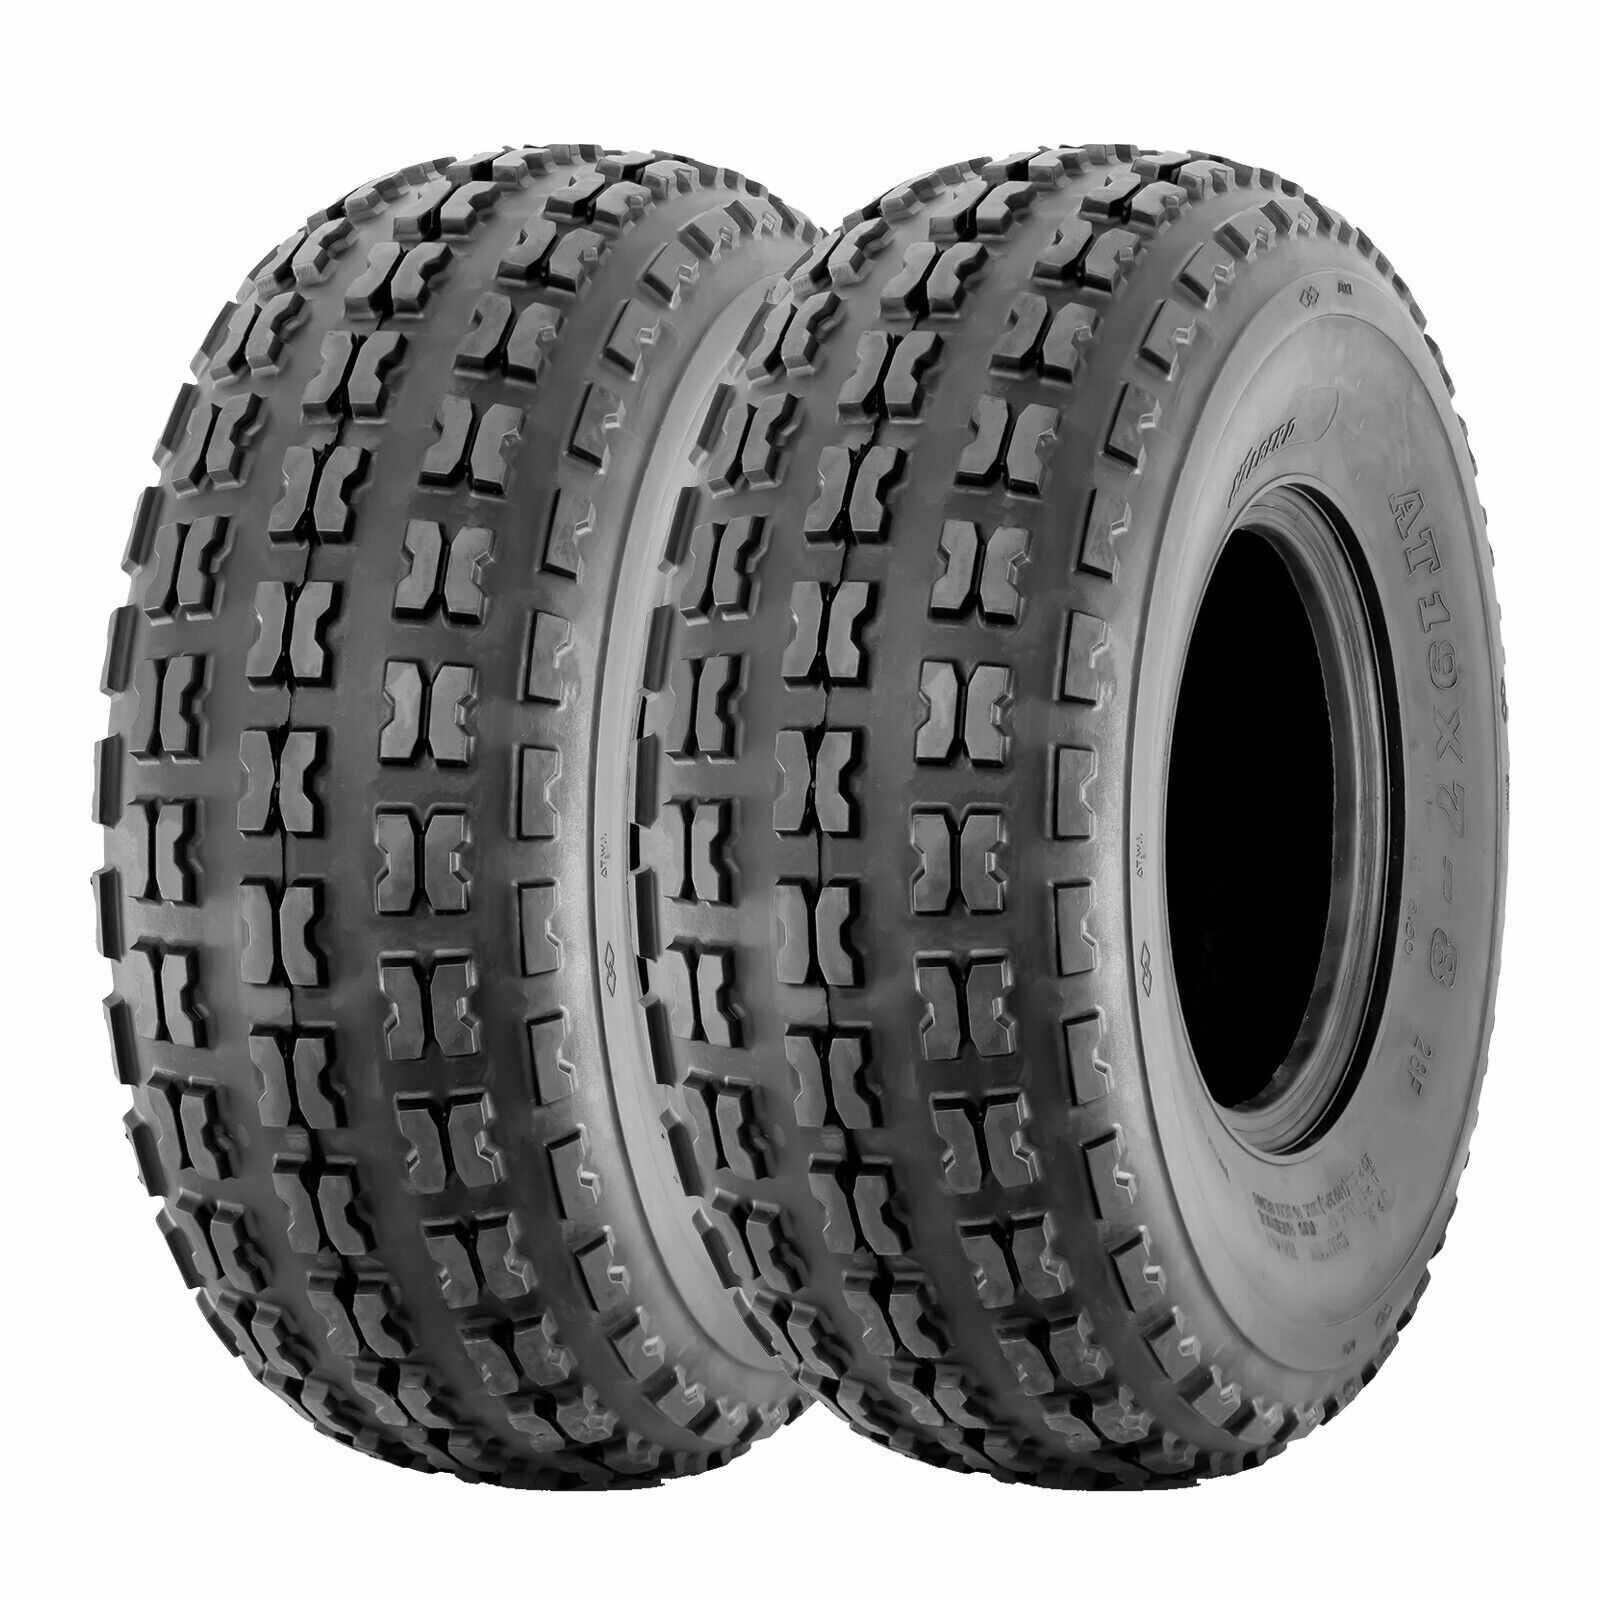 Premium Set Of 2 19x7-8 ATV Tires 4Ply Heavy Duty 19x7x8 Tubeless Replacement